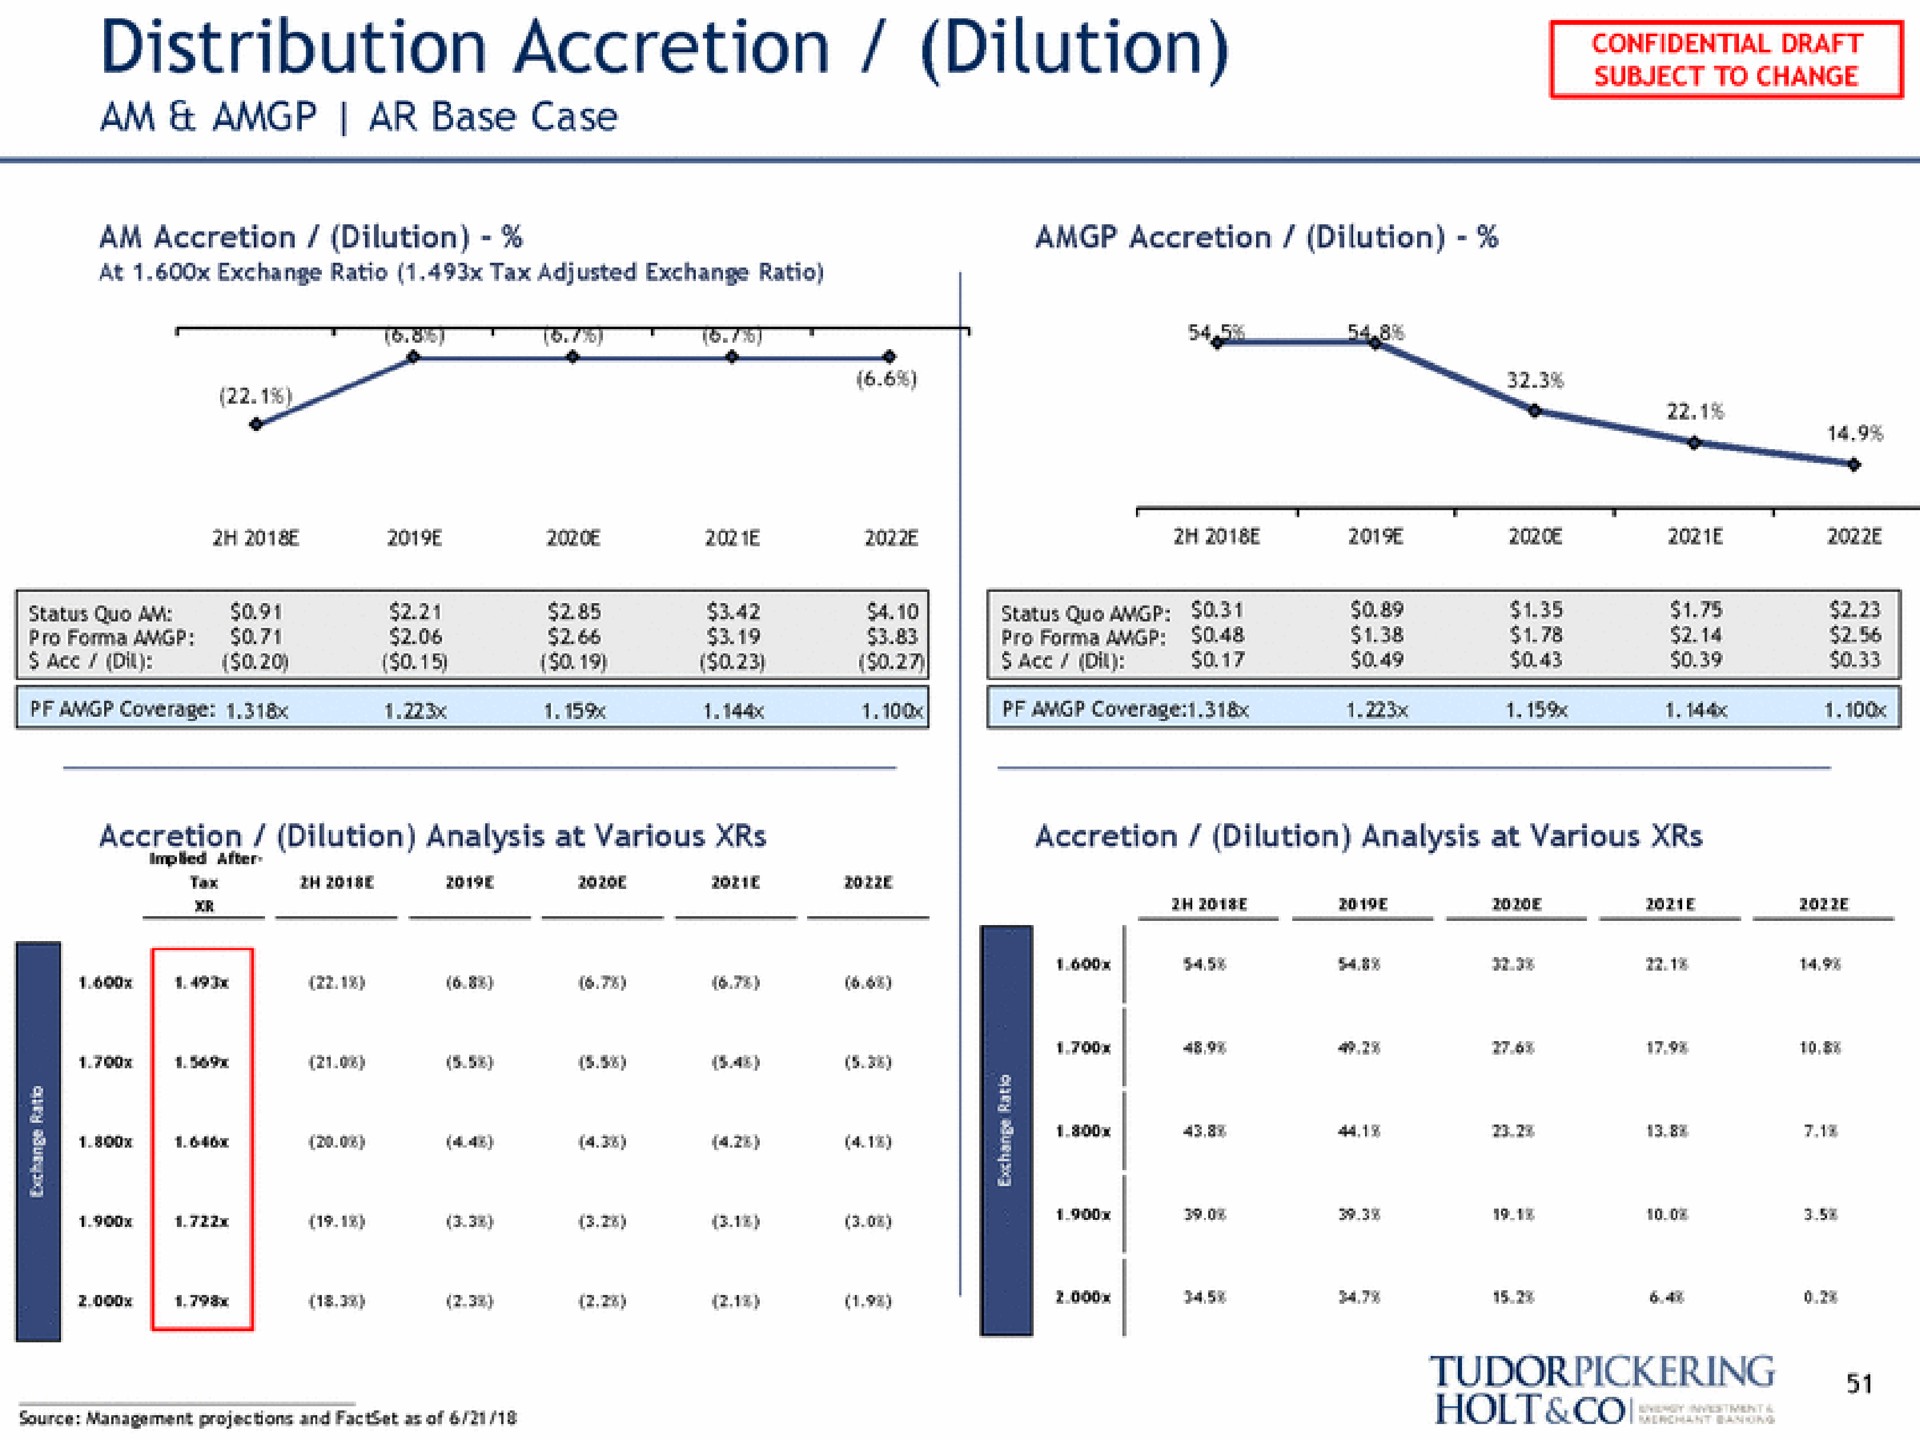 distribution accretion dilution retire | Tudor, Pickering, Holt & Co